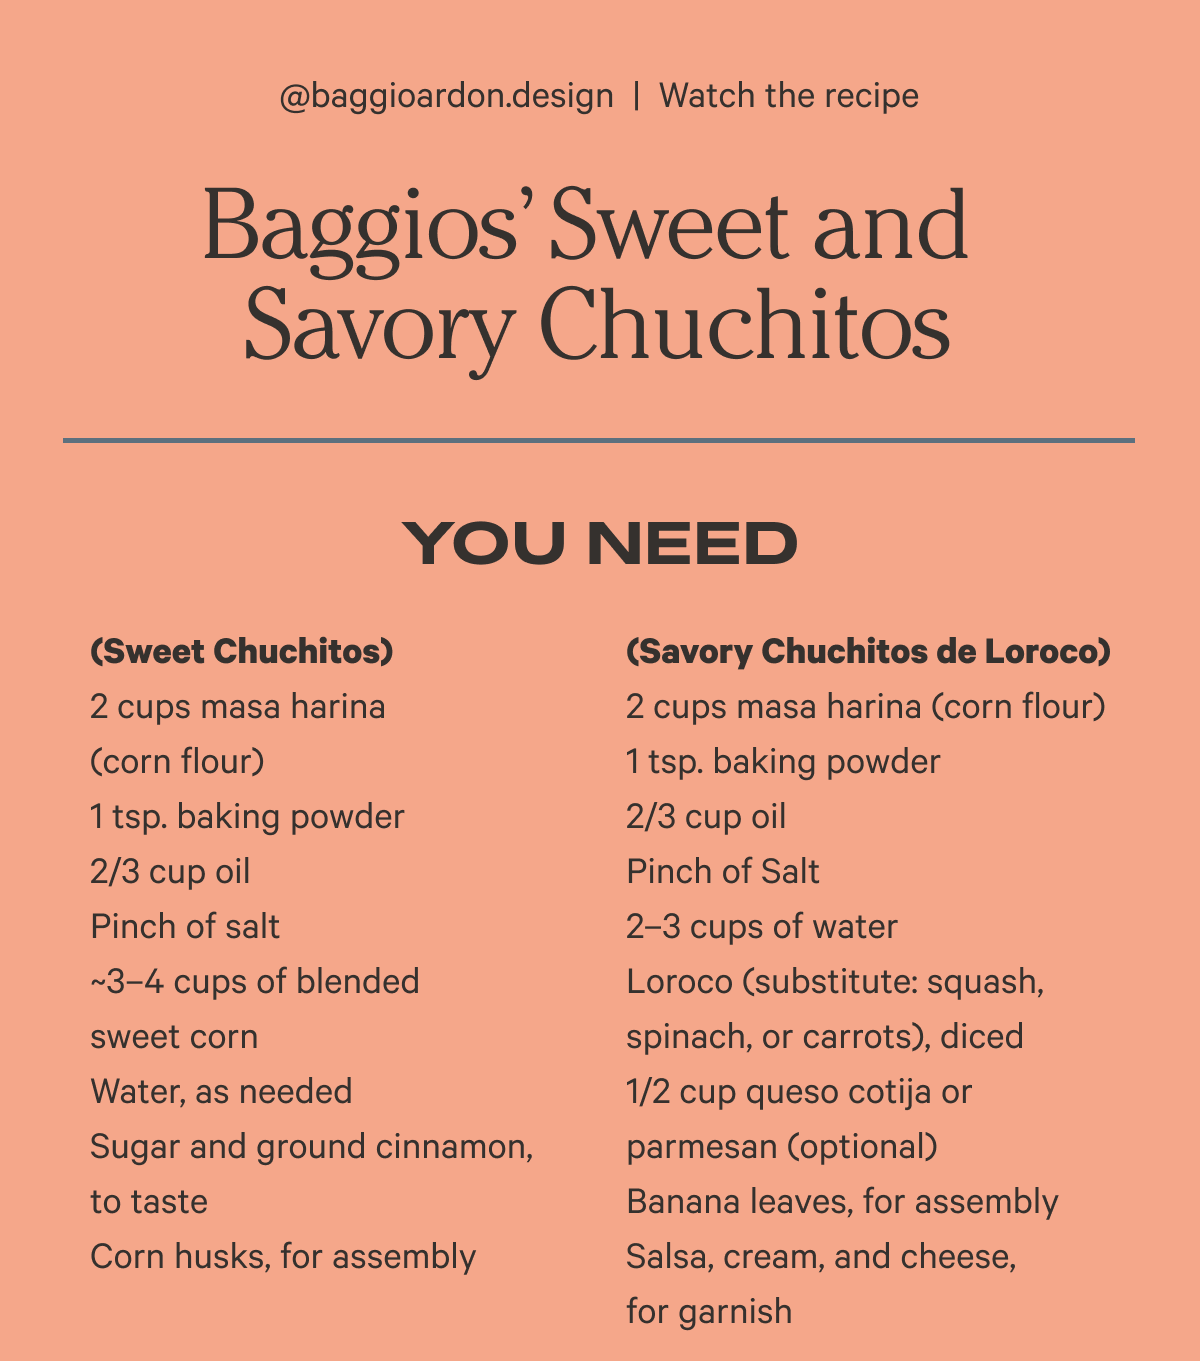 Baggios’ Sweet and Savory Chuchitos | @baggioardon.design